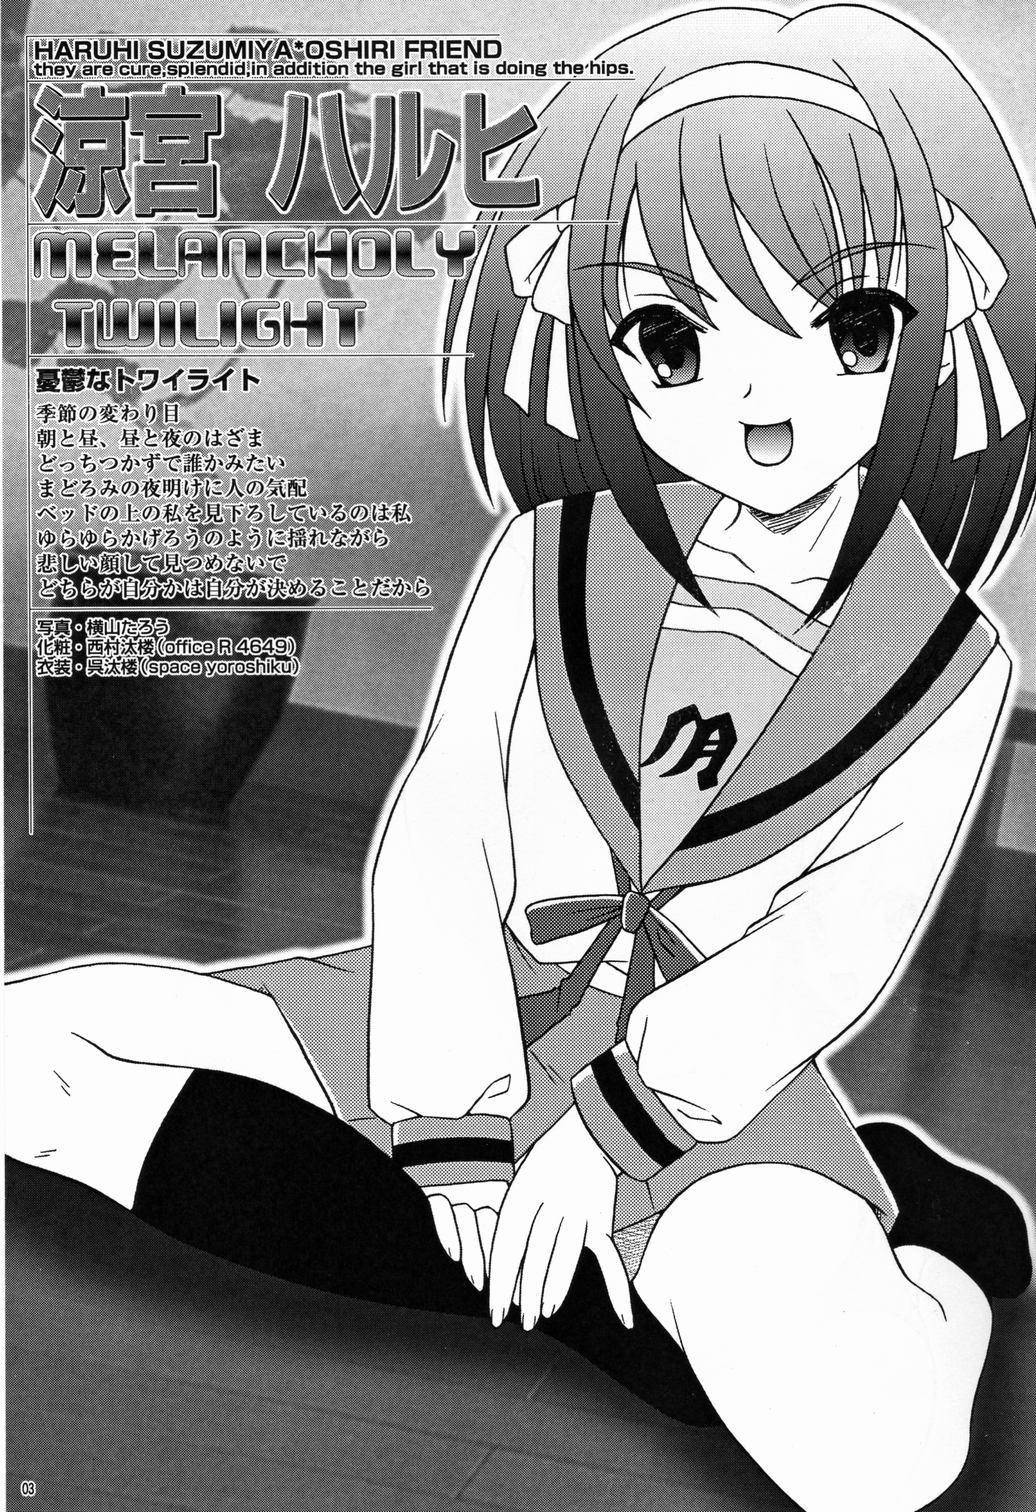 Short Saku-chan Club Vol. 6 - Neon genesis evangelion Fate stay night Keroro gunsou Sapphic Erotica - Page 3